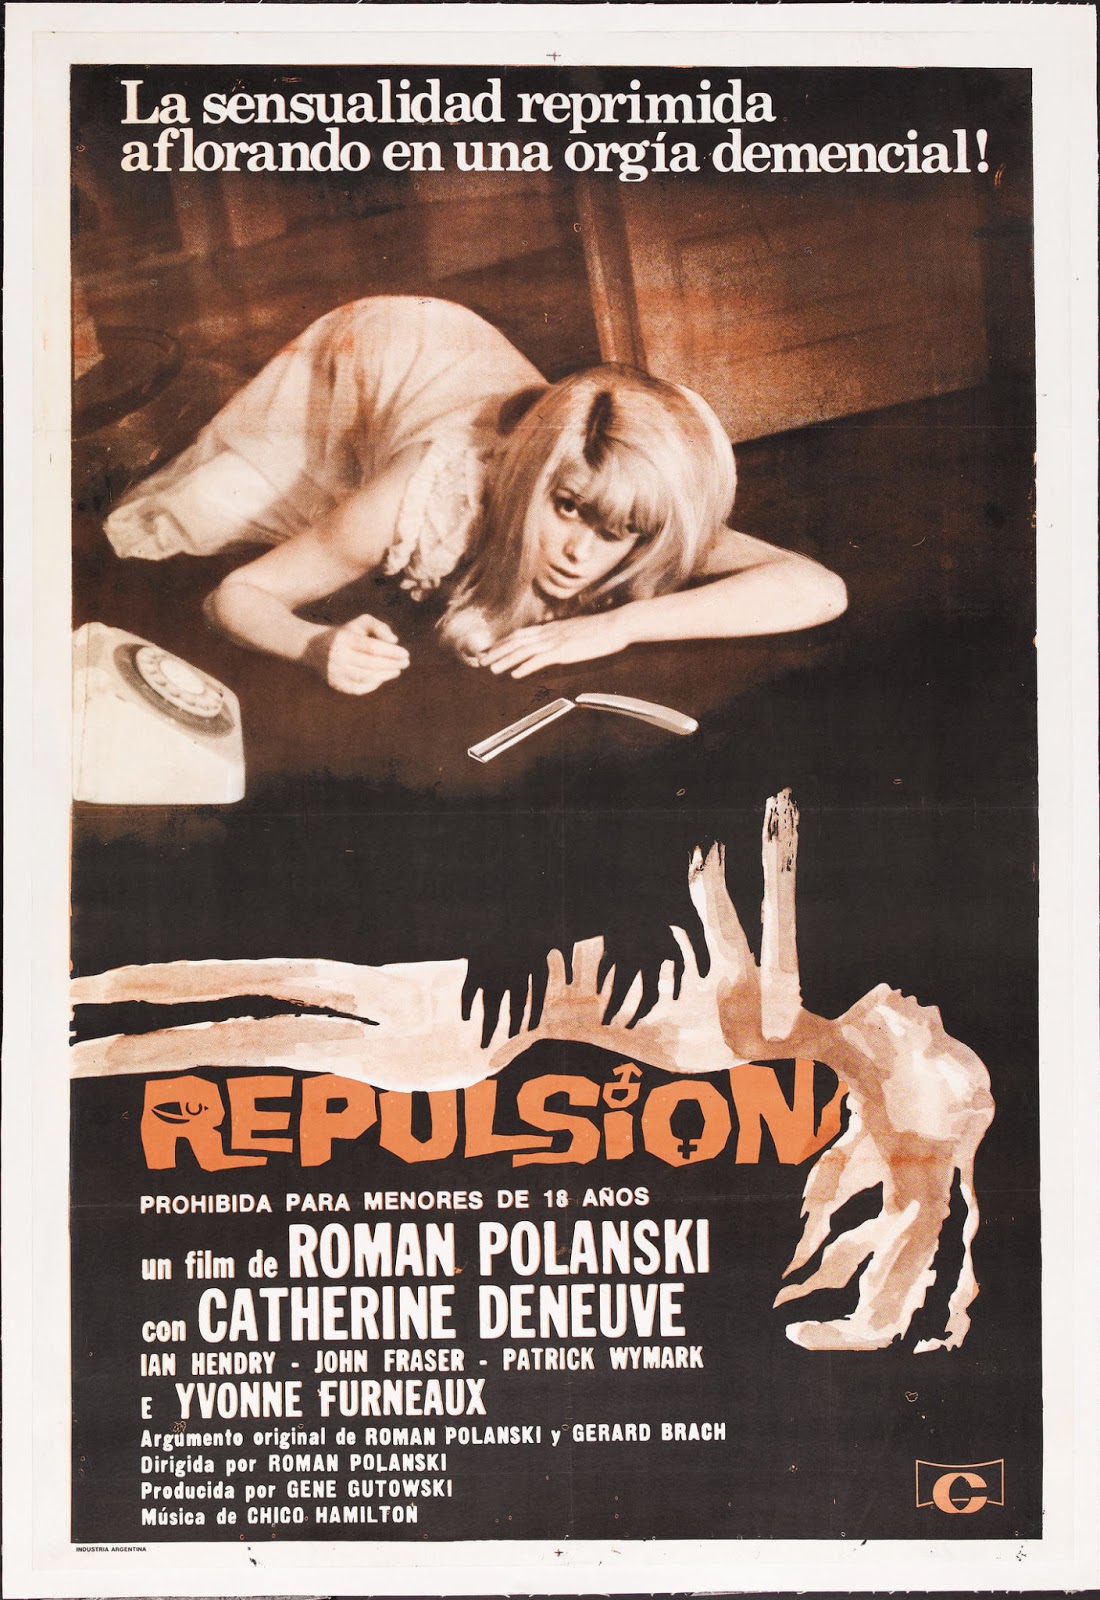 Repulsion - Roman Polanski (1965)